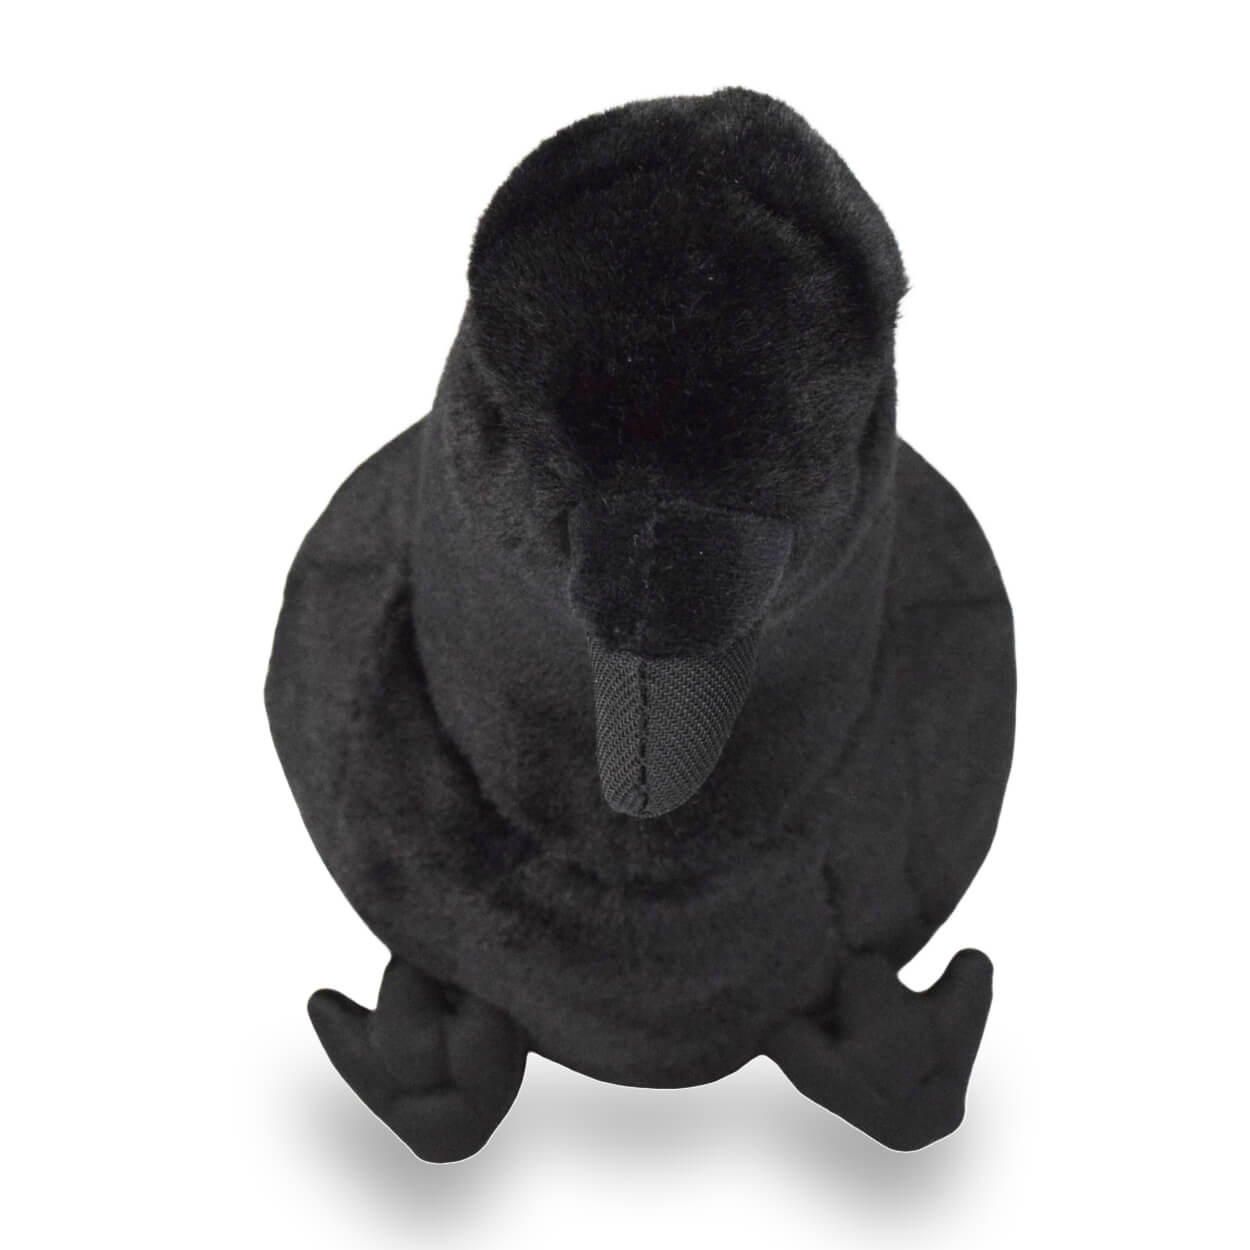 Realistic Large-Billed Crow Stuffed Animal Plush Toy